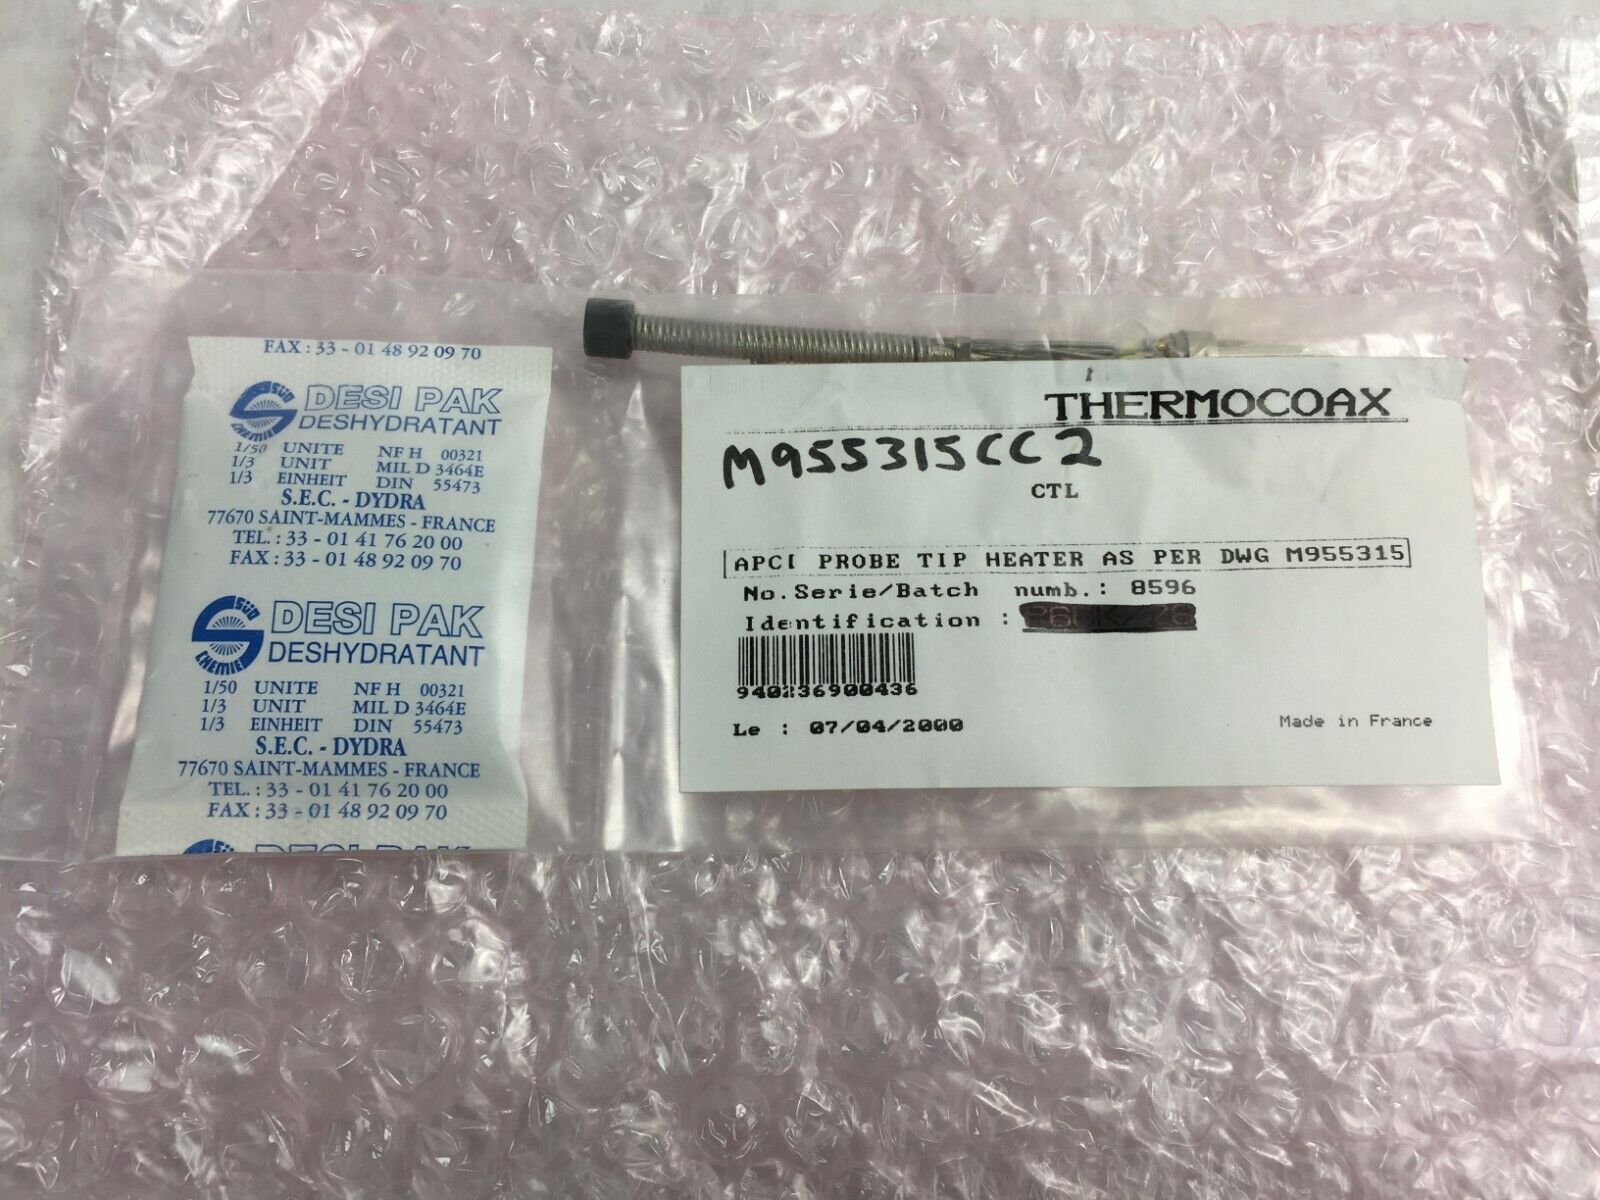 Thermocoax APCI Probe Tip Heater As Per DWG M955315